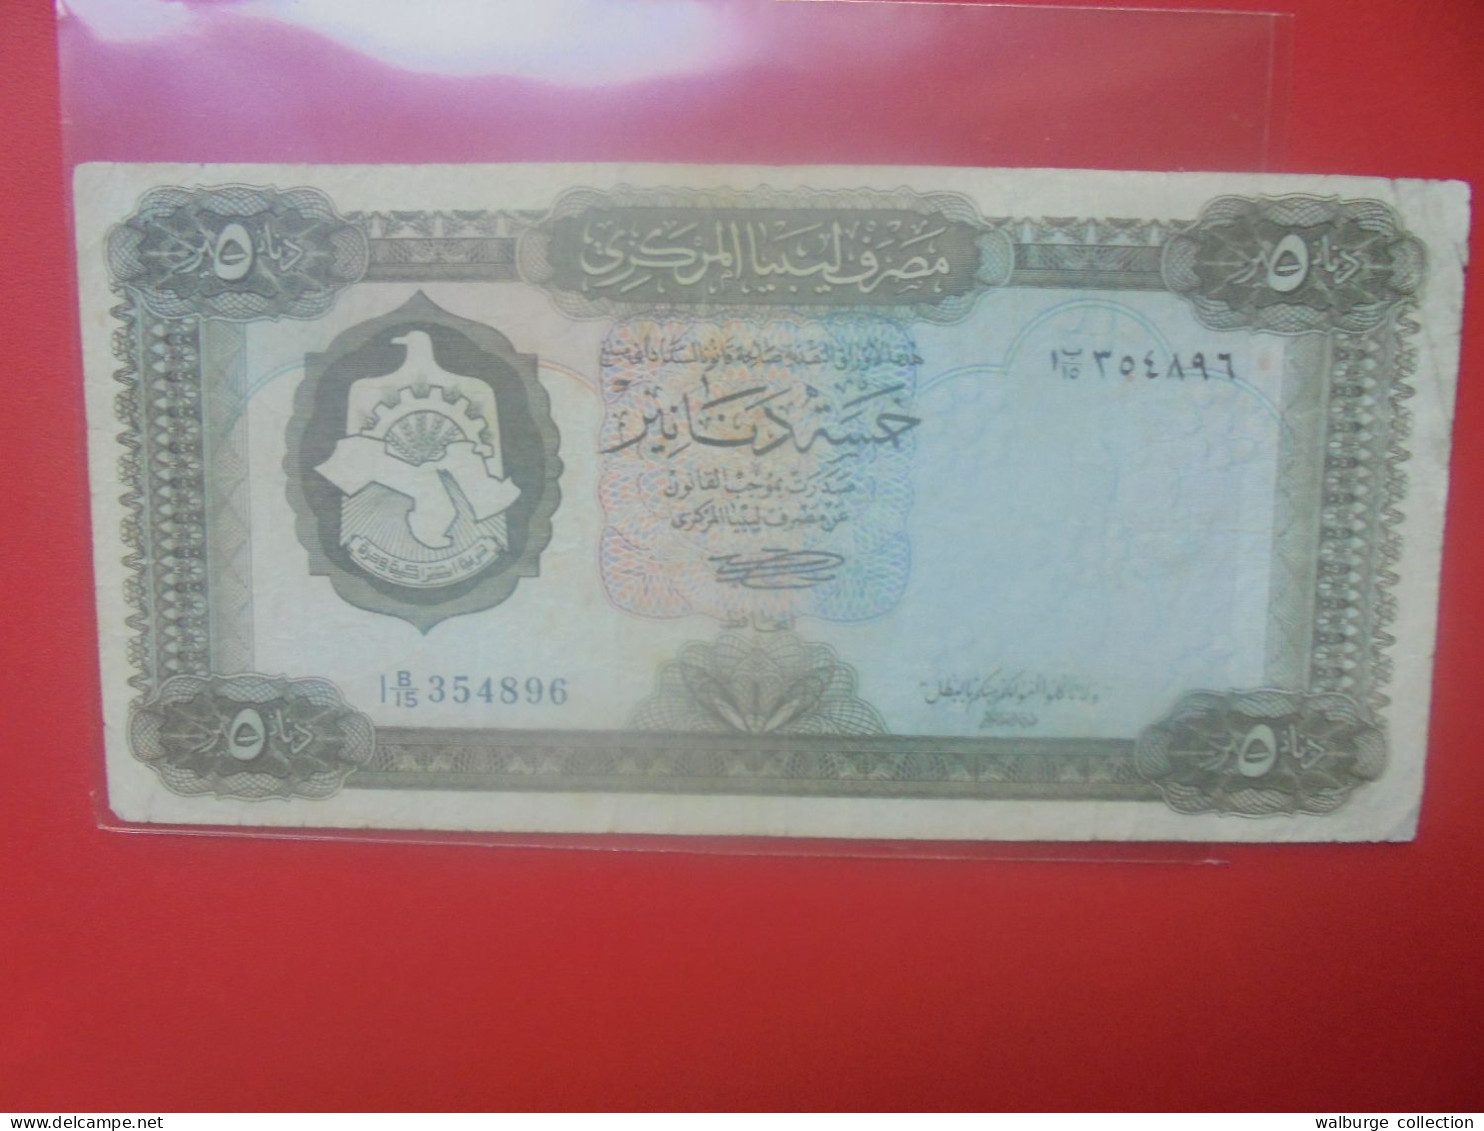 LIBYE 5 DINARS 1971-72 Circuler (B.33) - Libië